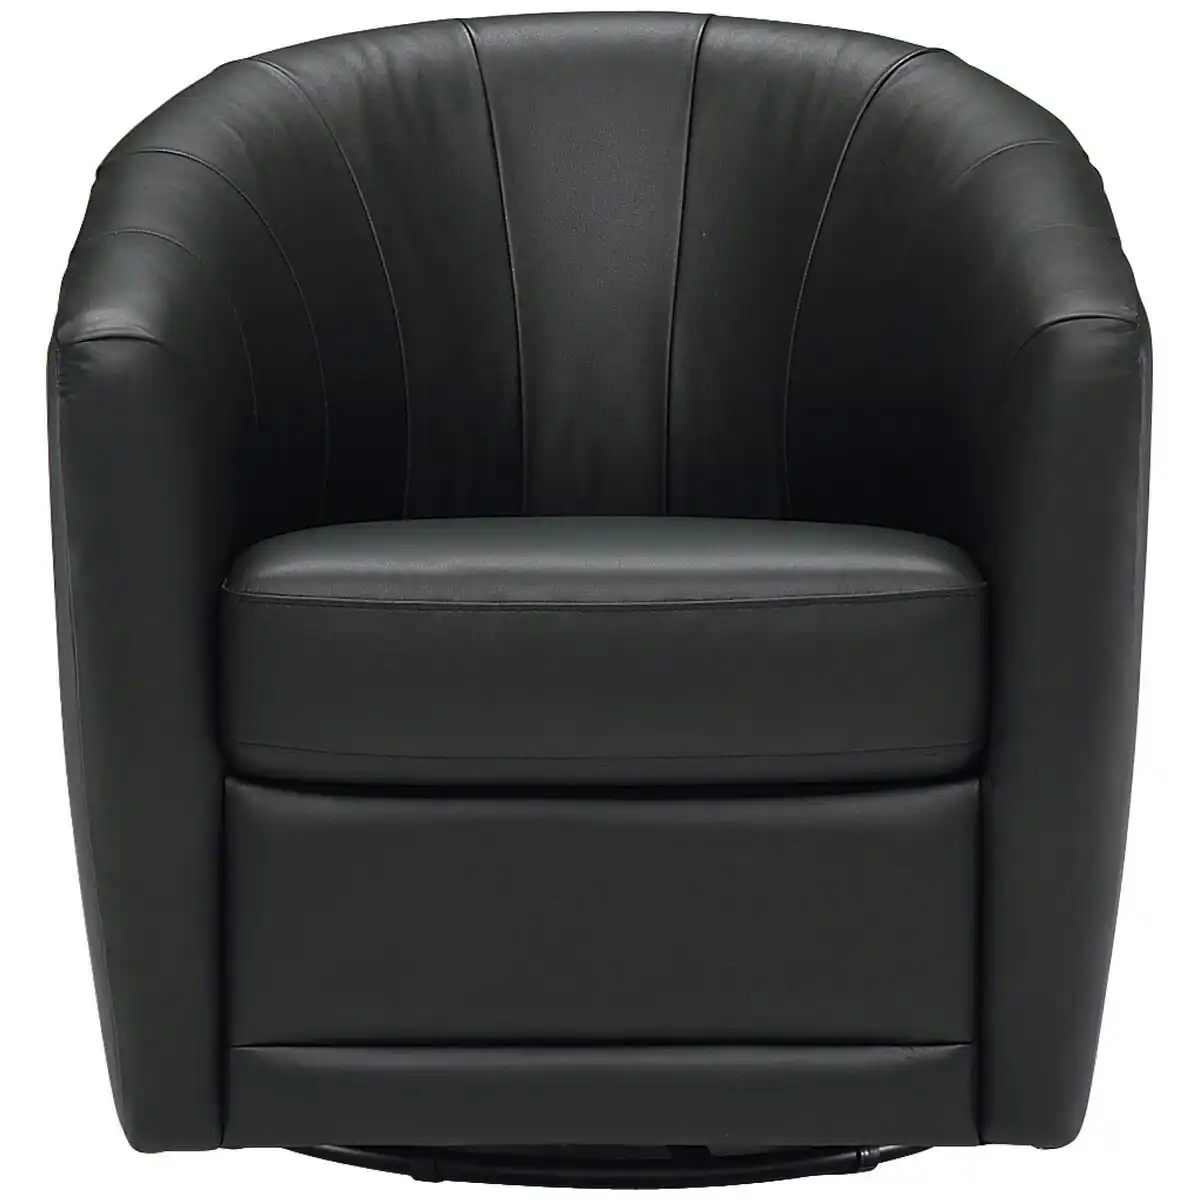 Natuzzi Editions Giada Black Leather Swivel Chair